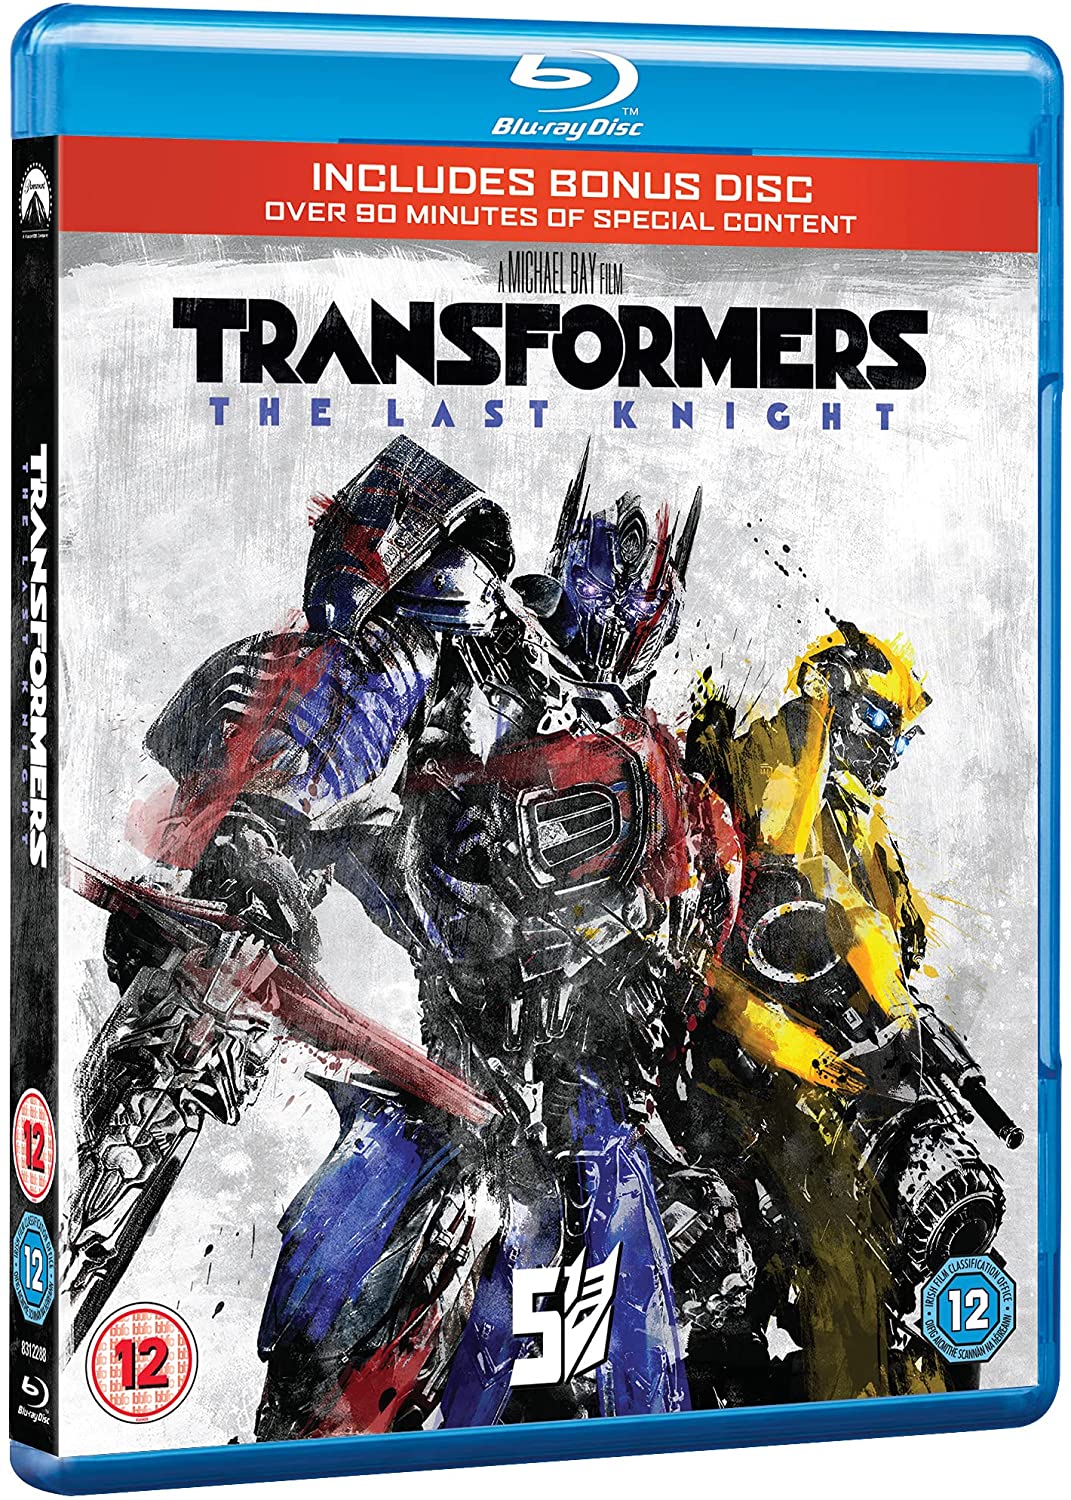 Transformers: The Last Knight (BD+ Disque bonus BD) [Blu-ray] [2017] [Région gratuite]